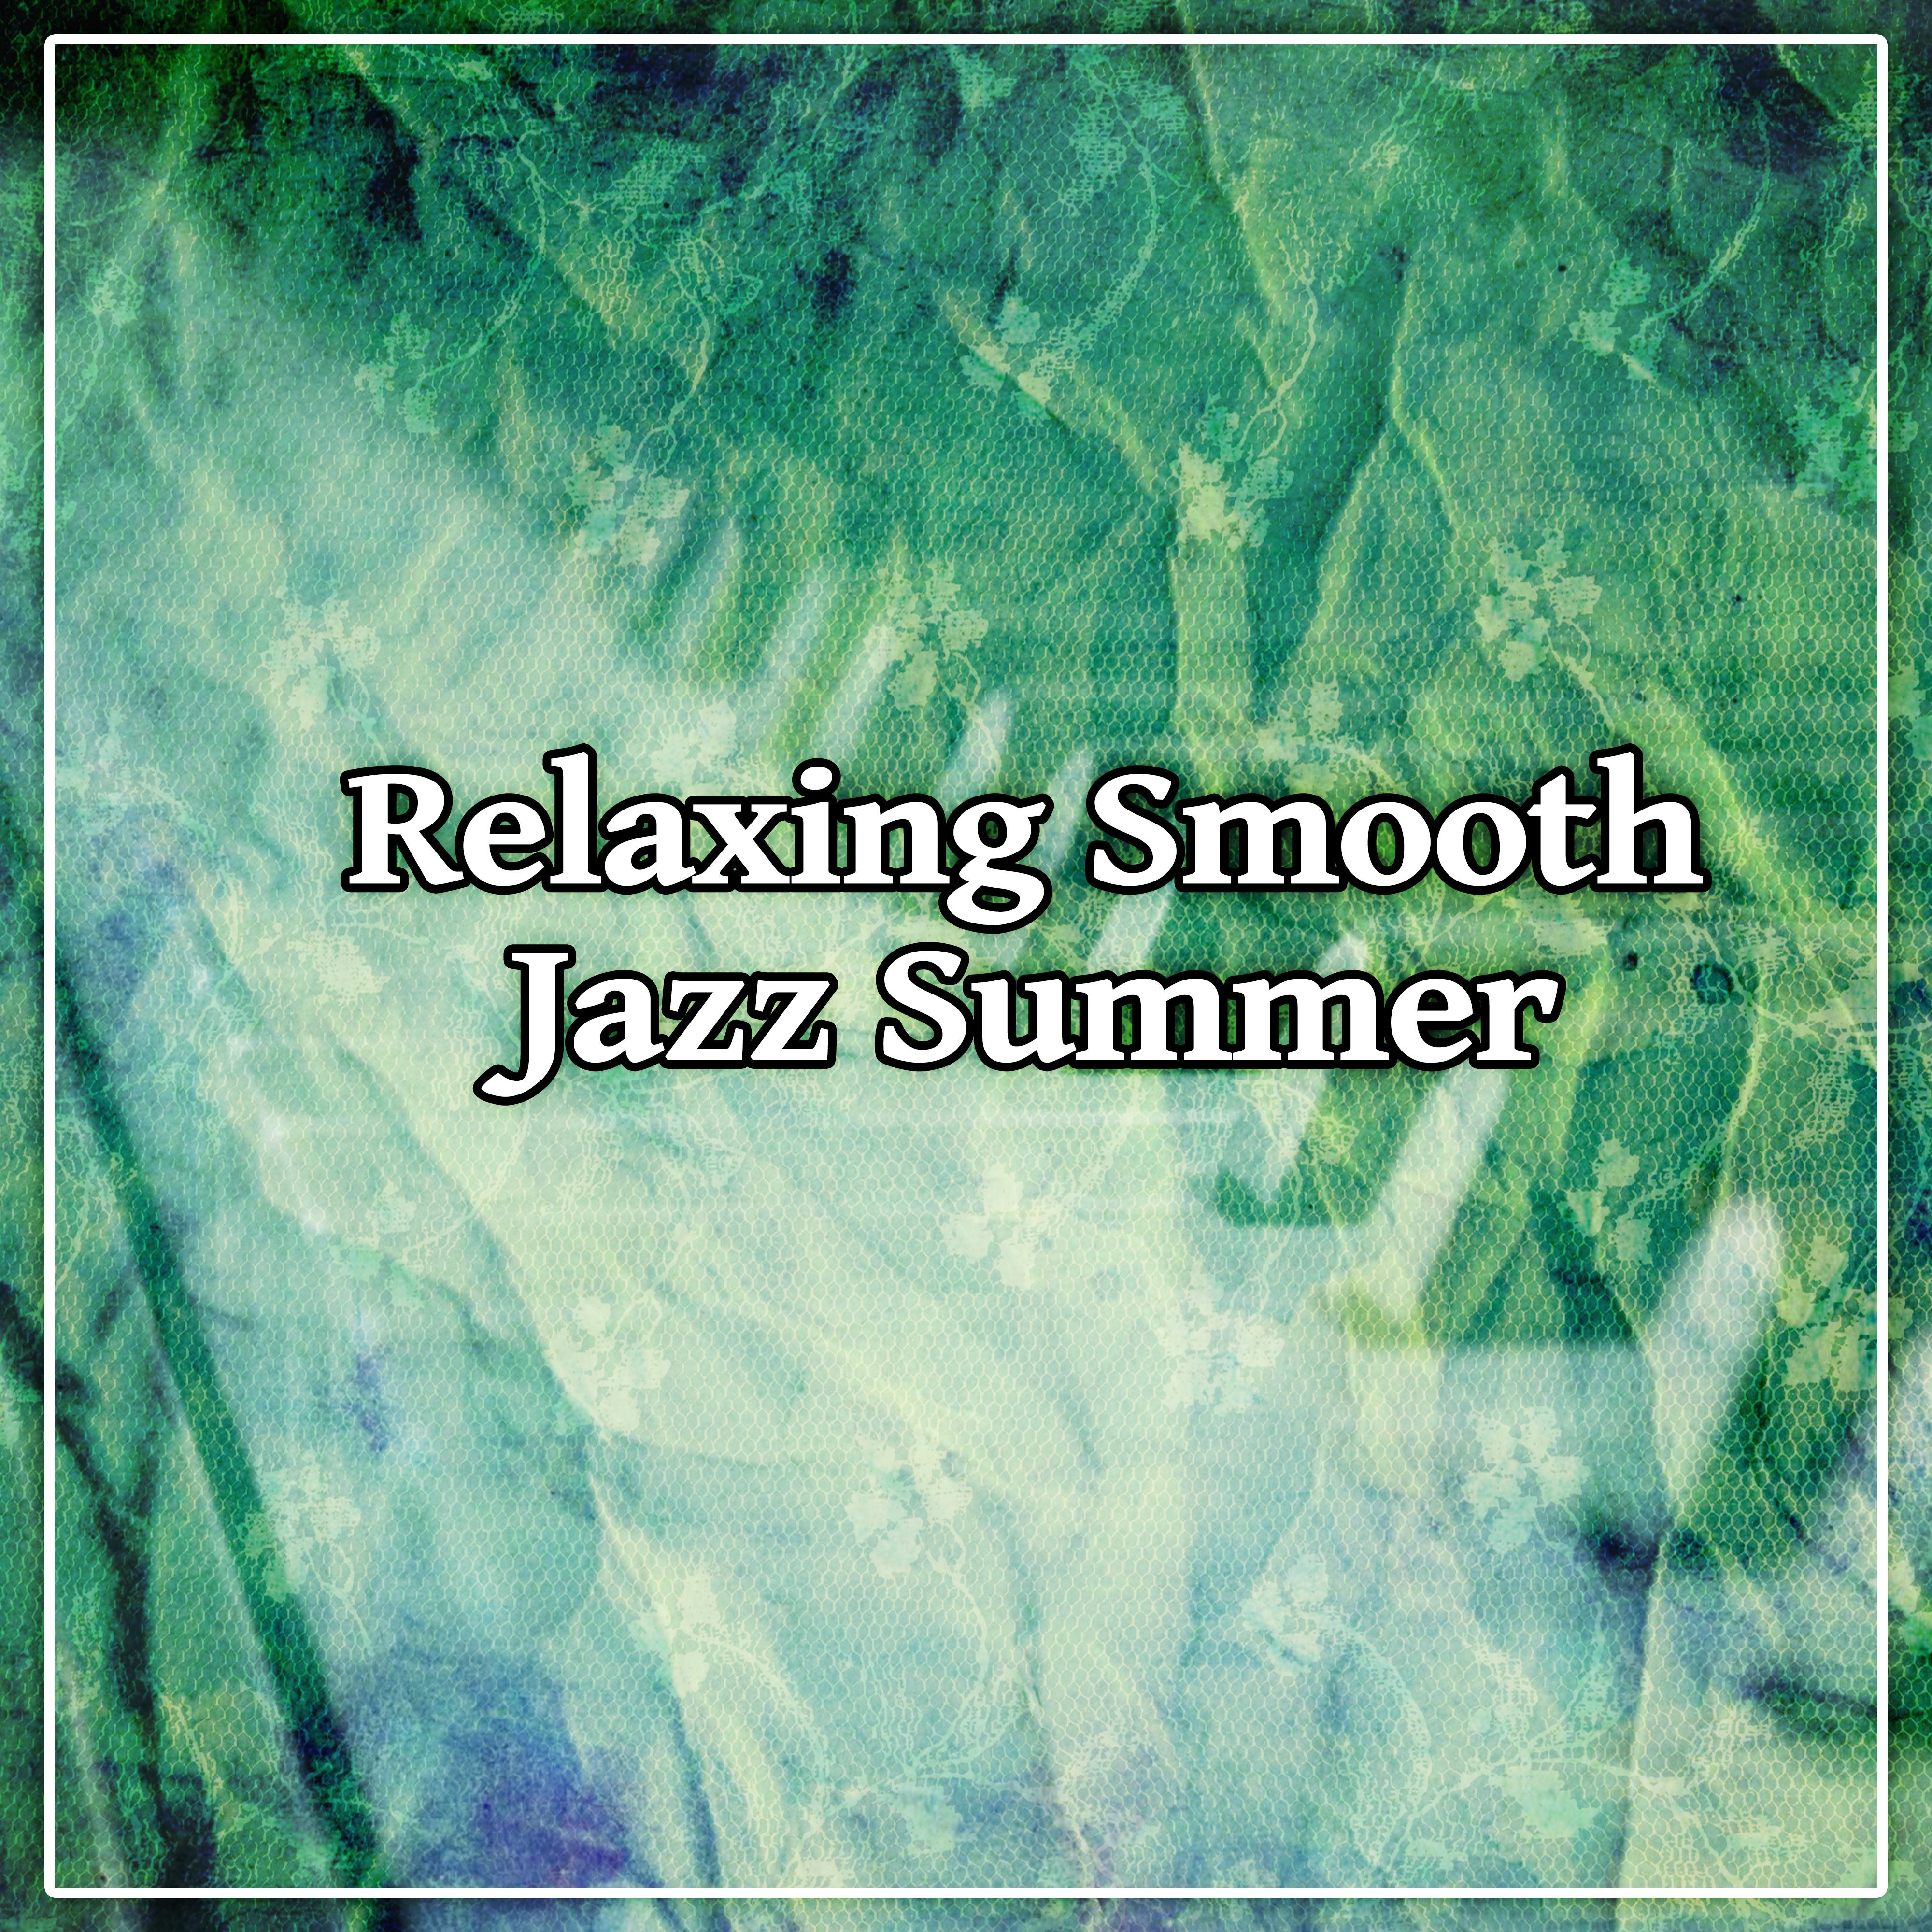 Relaxing Smooth Jazz Summer - Bossa Nova Chill Lounge Music 2016